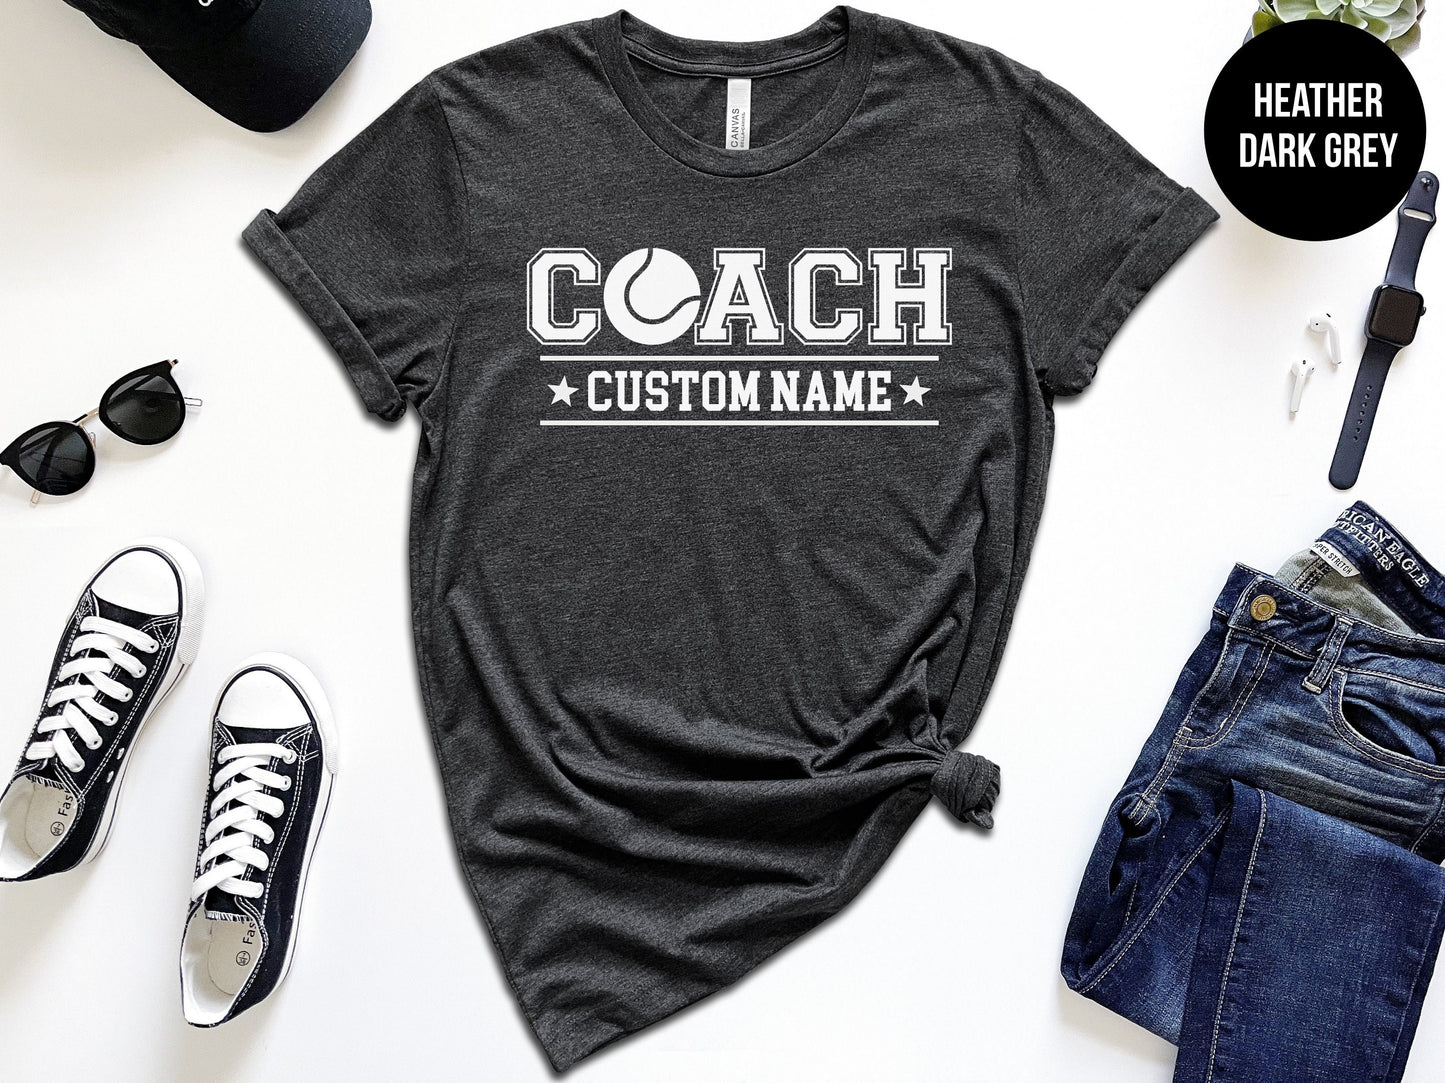 Tennis Coach (with Custom Name)